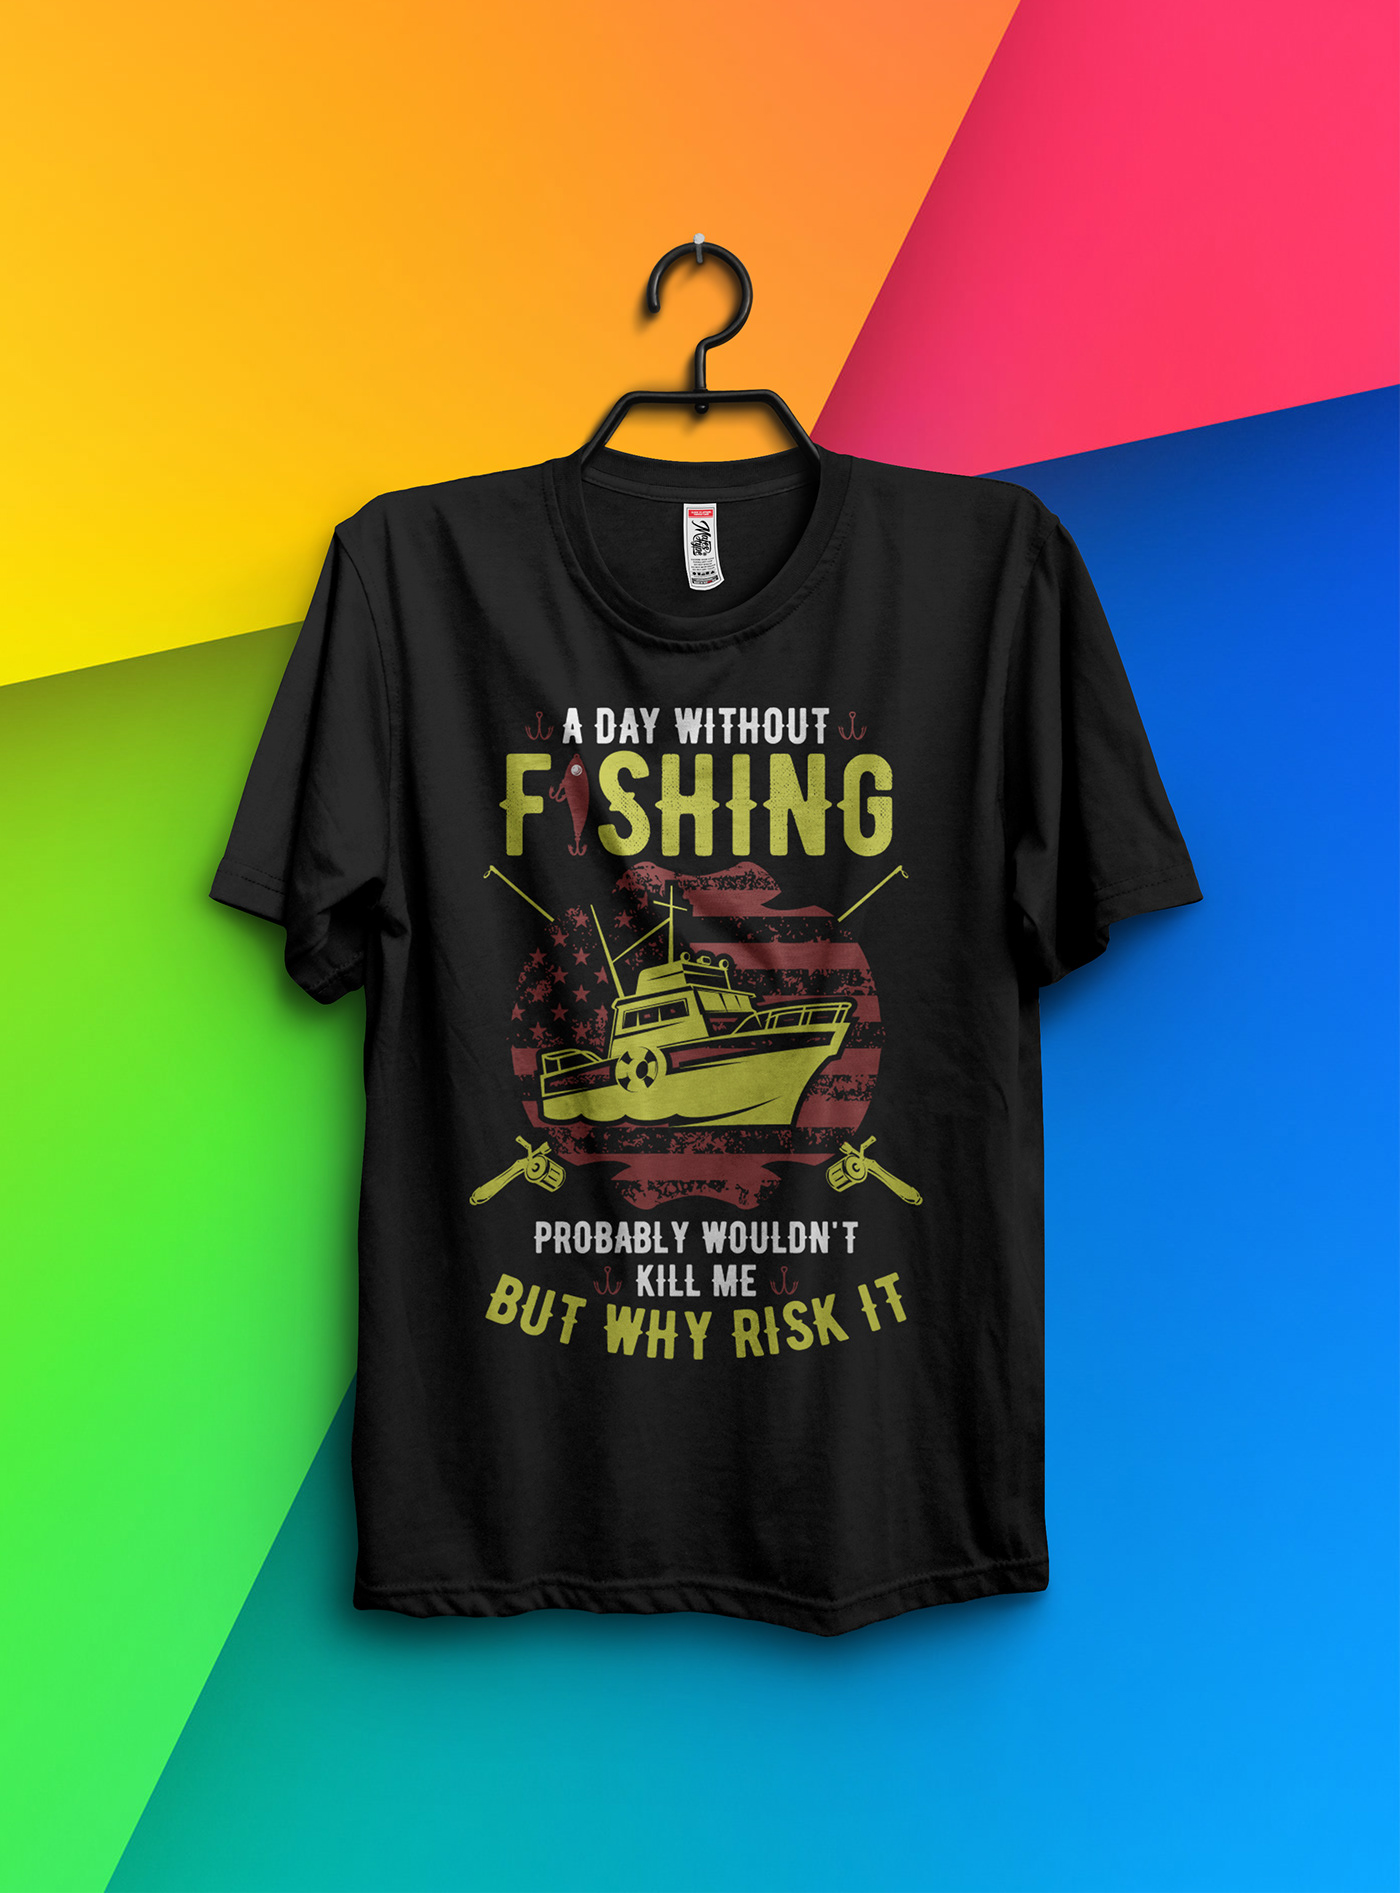 bass camping carpfishing Fisherman fishing tshirt bundle funny qoutes Hunting river Travel tshirts